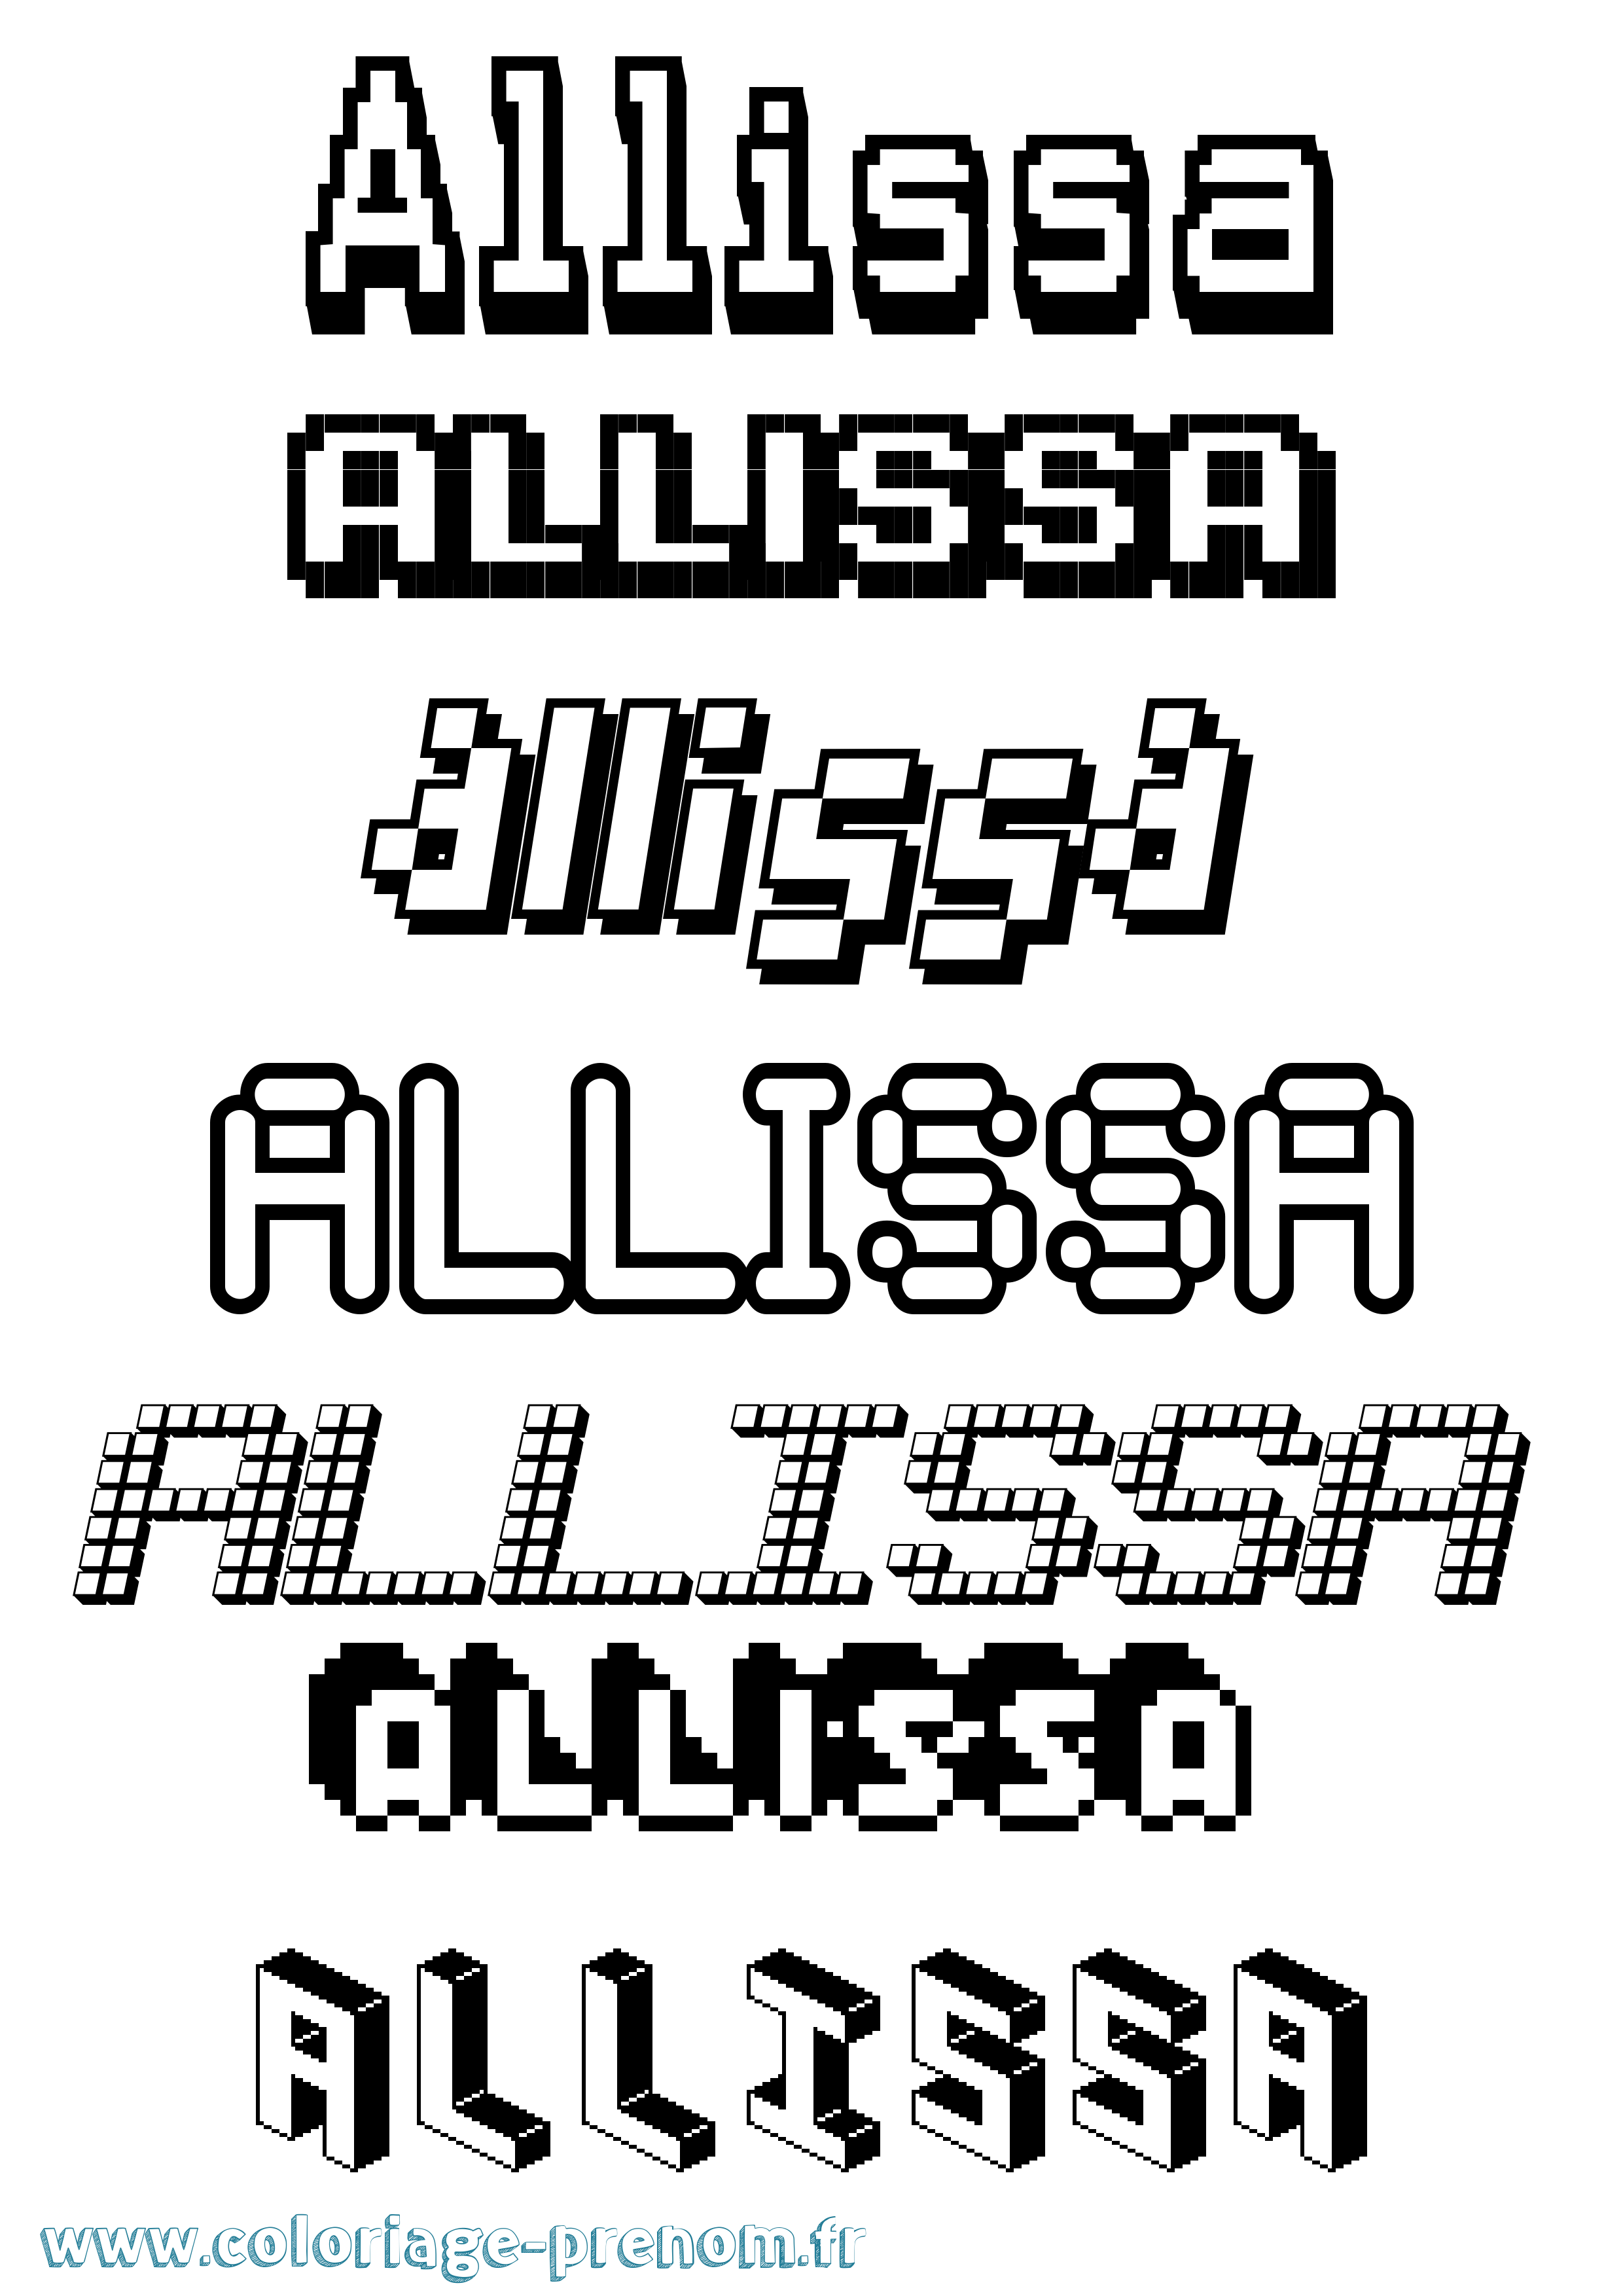 Coloriage prénom Allissa Pixel